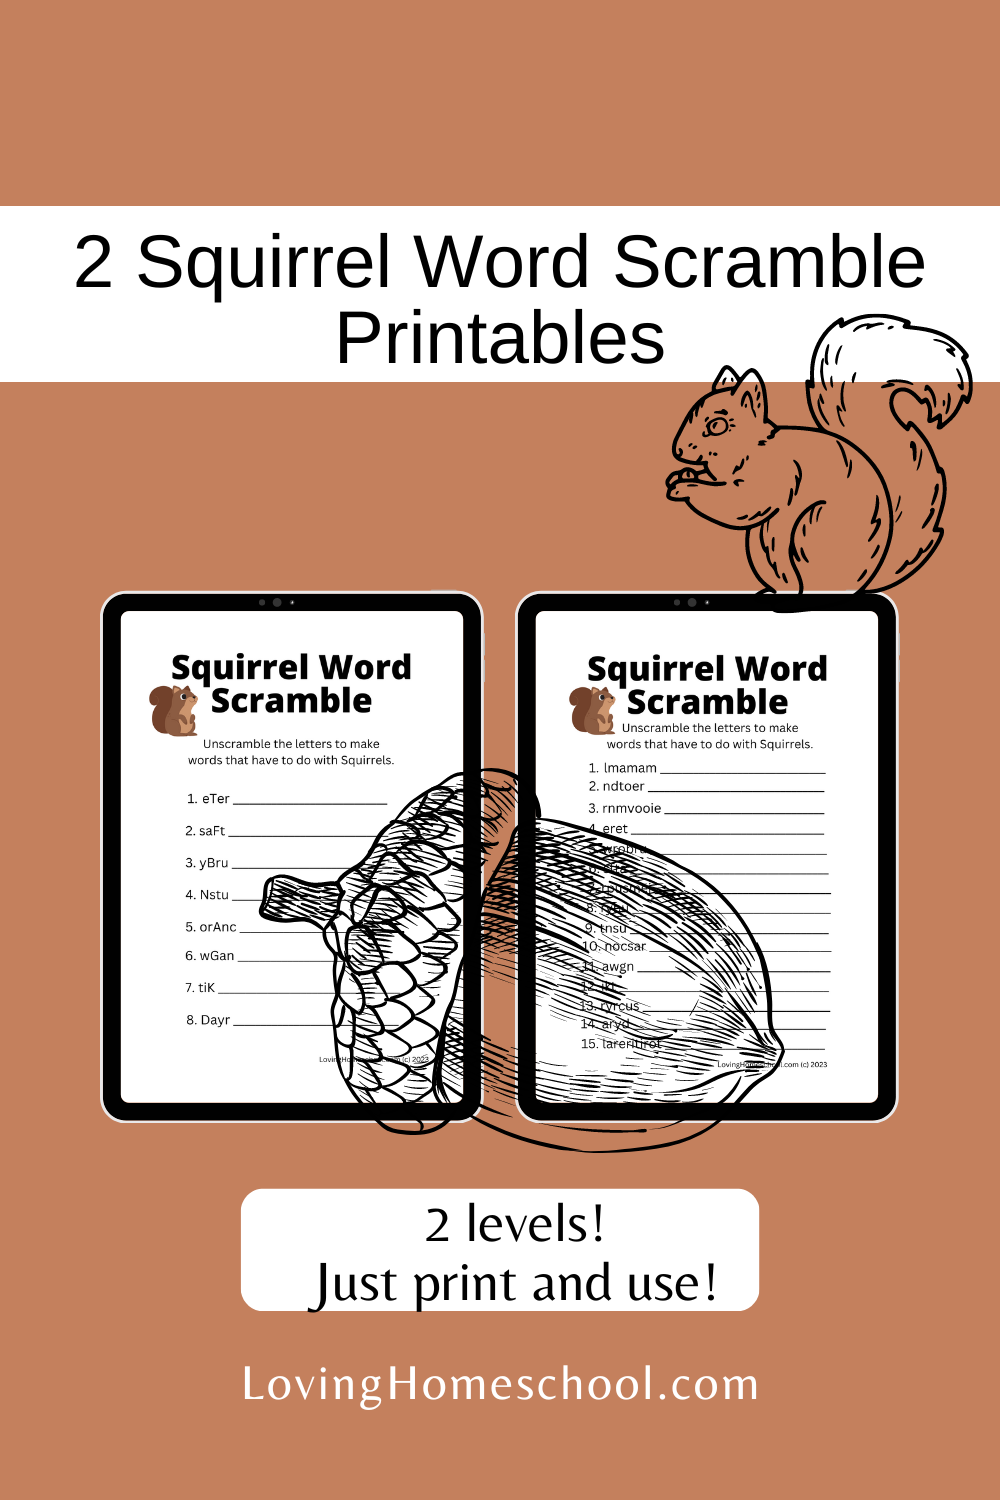 Squirrel Word Scramble Printables Pinterest Pin